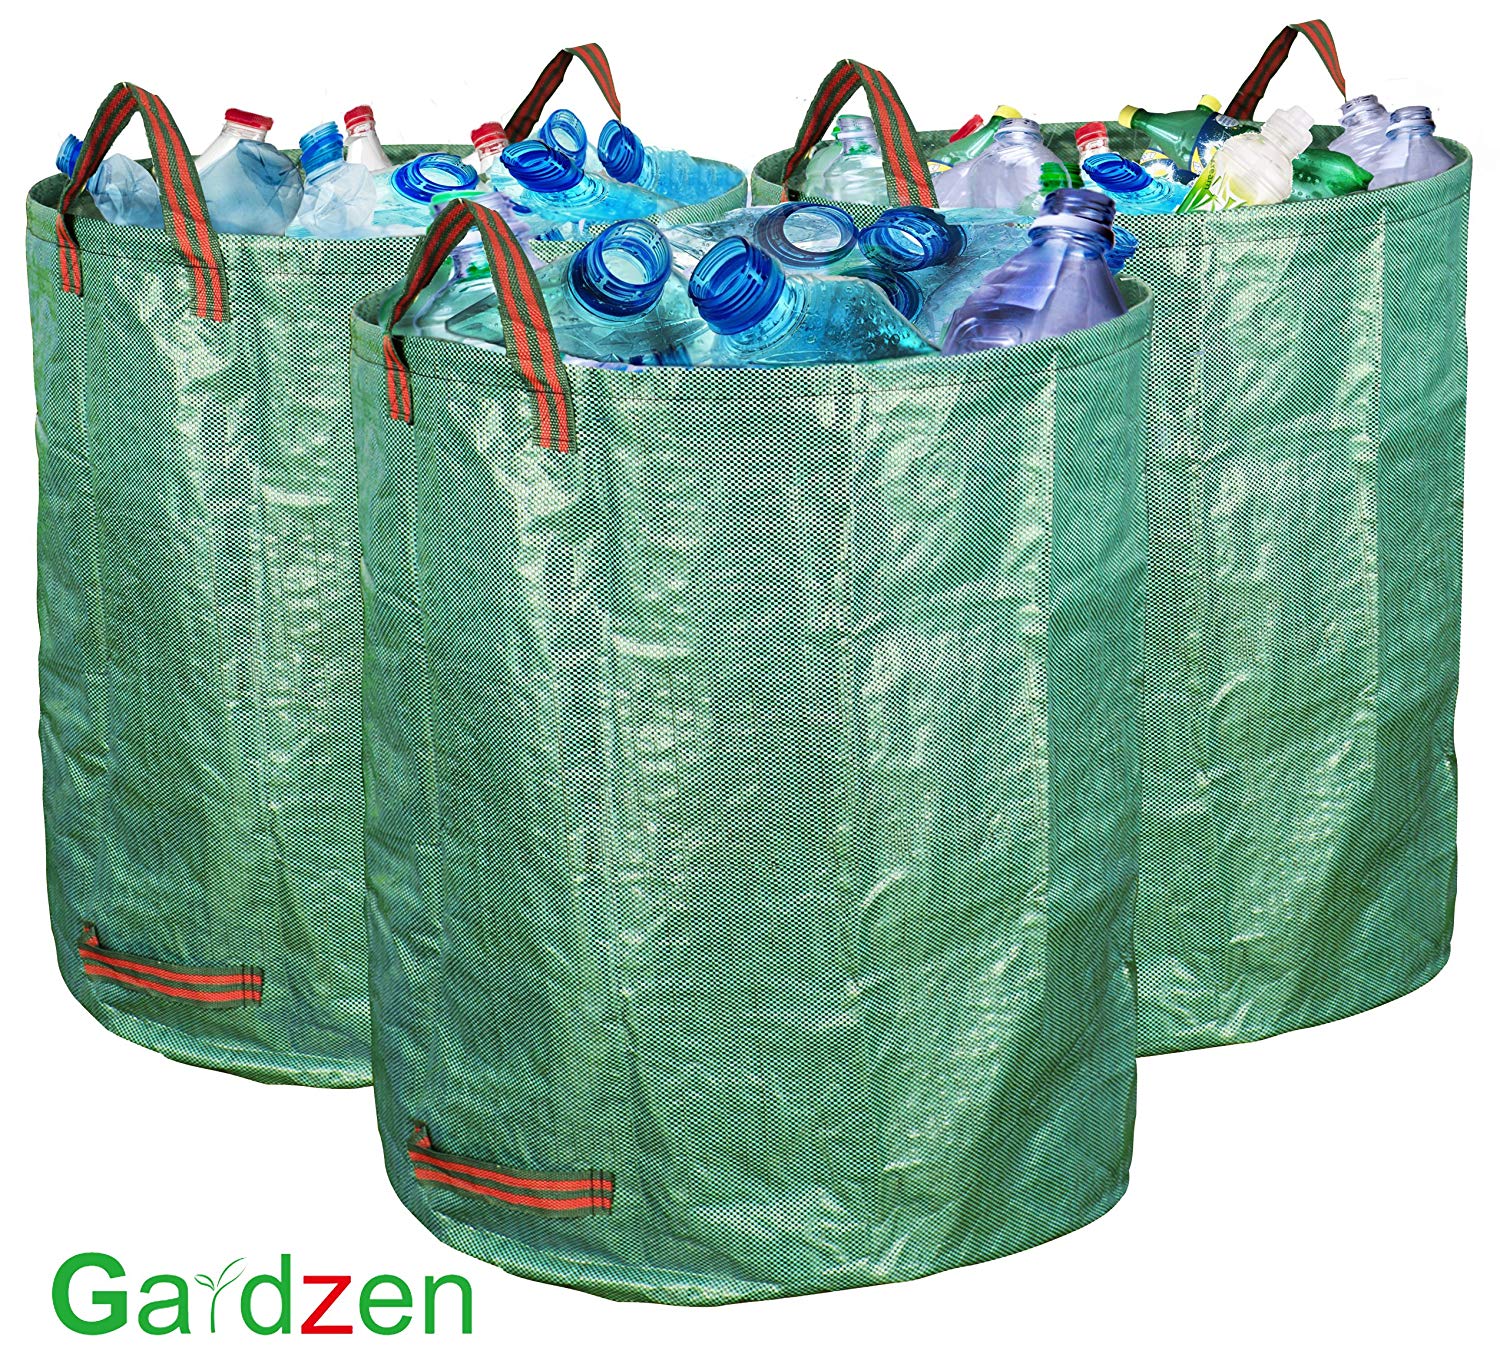 DuraSack 48 Gal. Green Outdoor Polypropylene Reusable Lawn and Leaf Bag  (1-Pack)